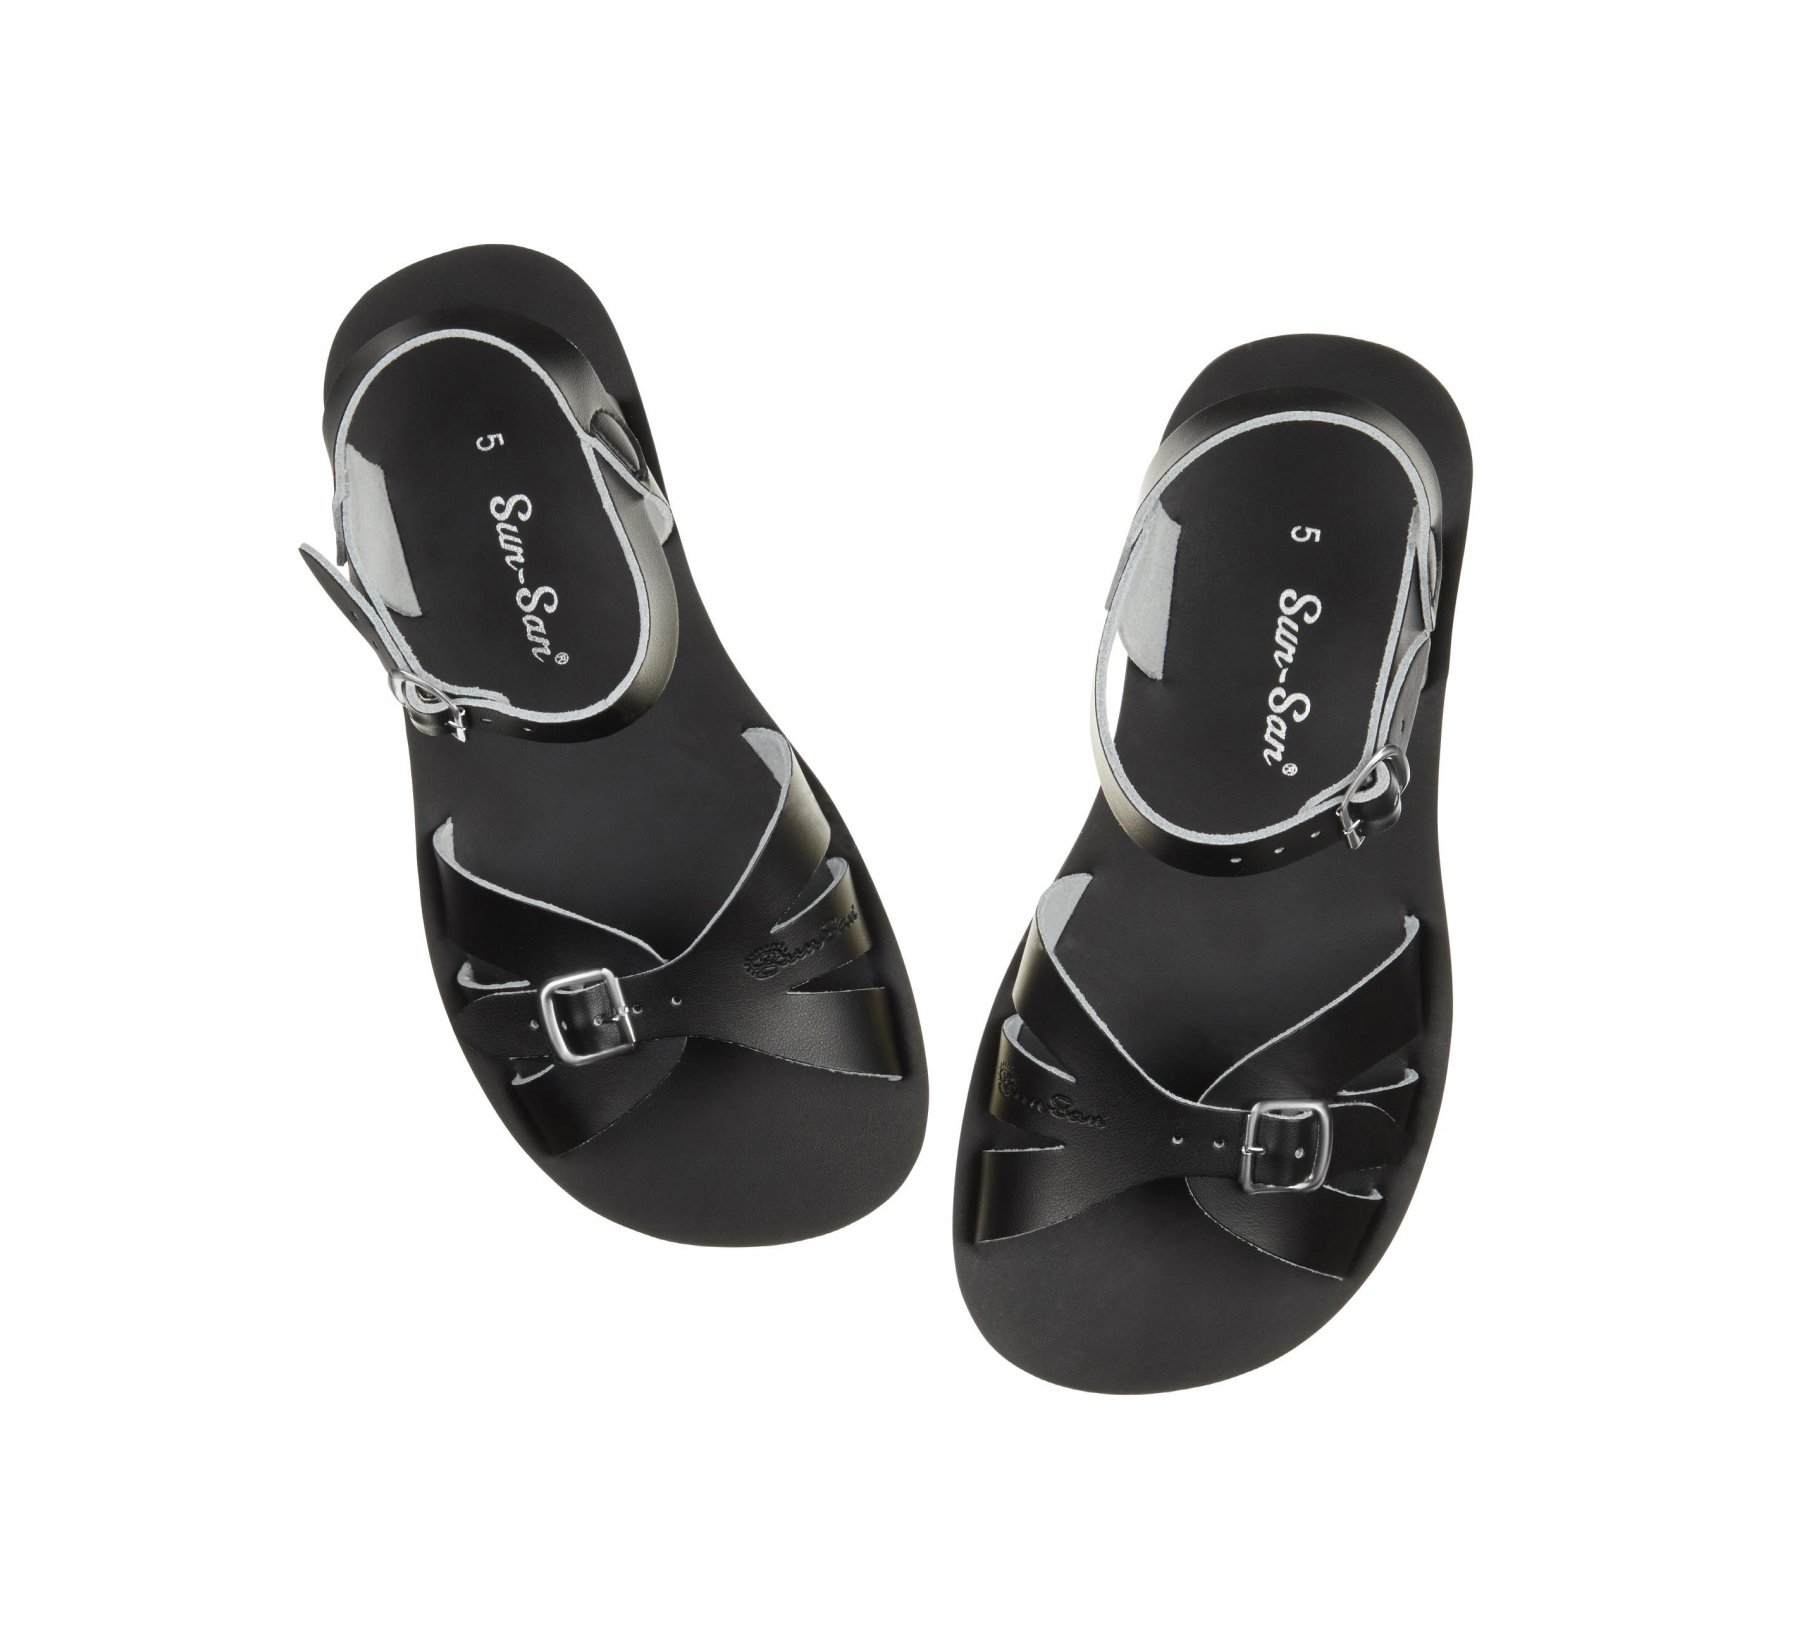 Boardwalk Black Sandal - Salt Water Sandals